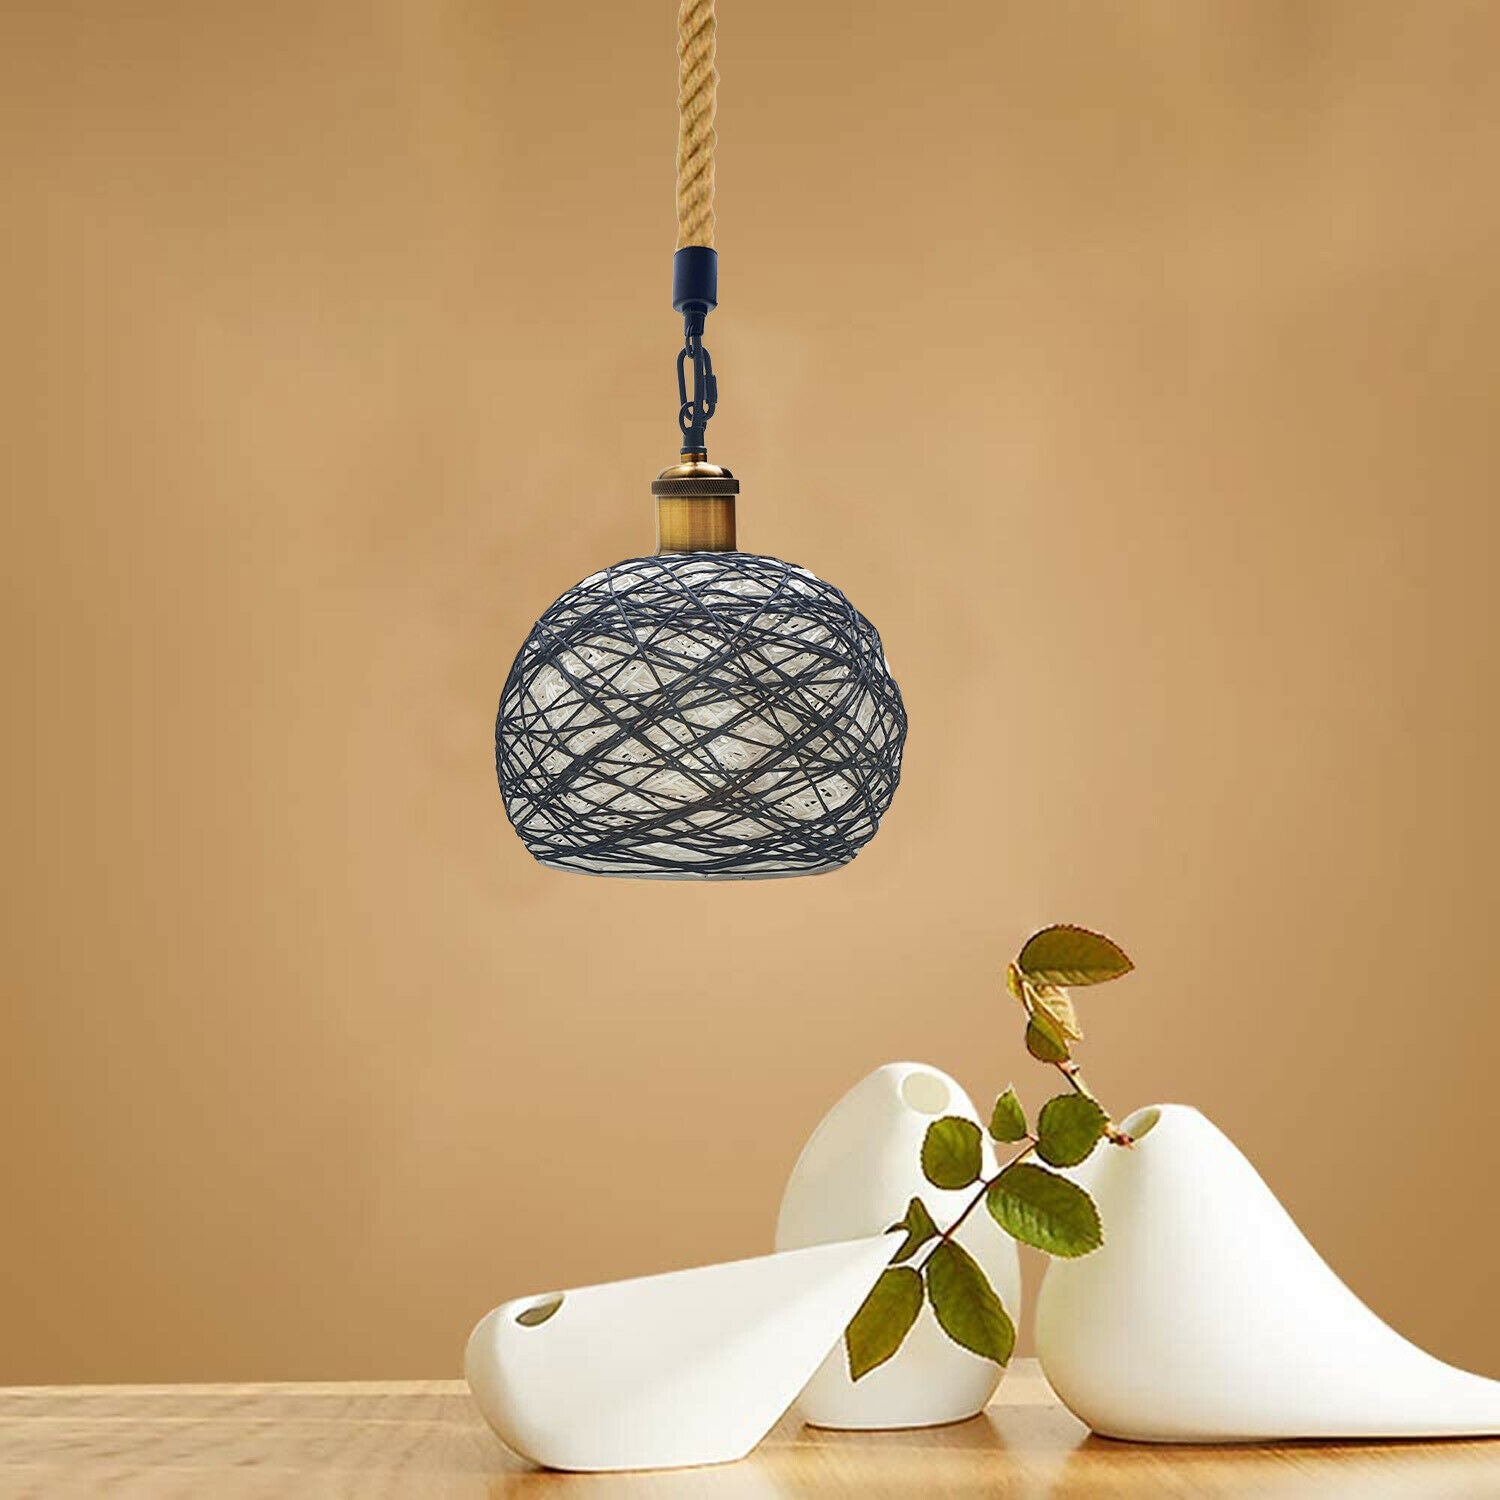 LEDSone industrial vintage Rope Rattan Woven Pendant Lamp Dome Pendant Light~1959 - LEDSone UK Ltd